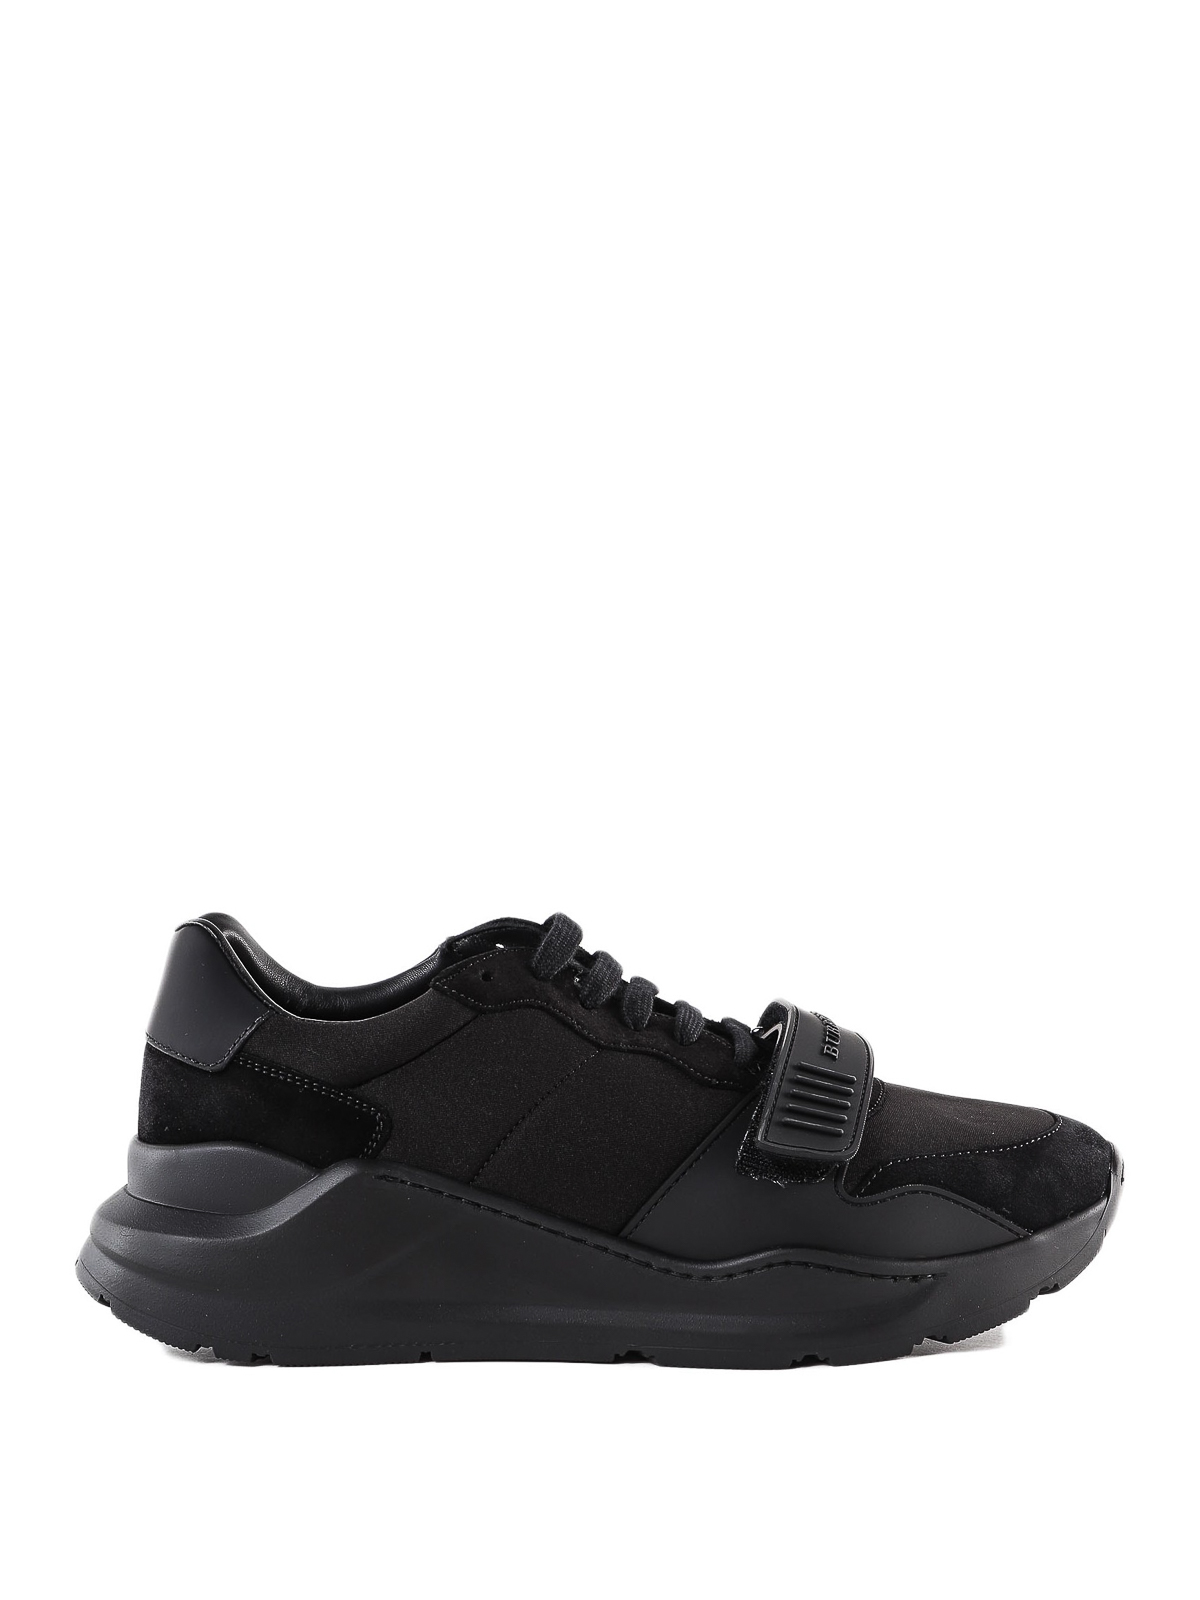 burberry black sneakers